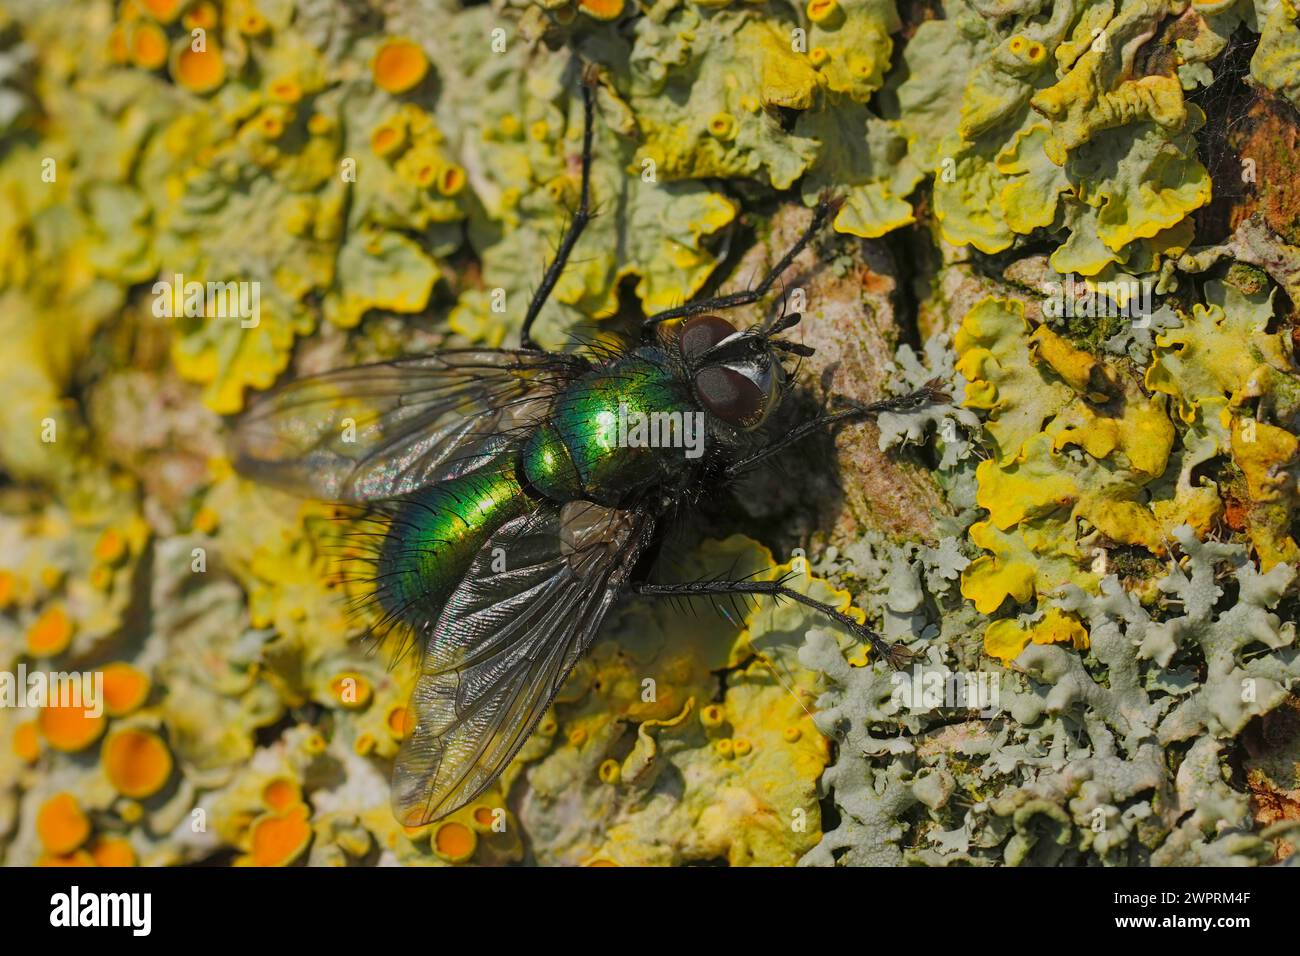 Detailed closeup on a European metallic green tachinid fly, Gymnocheta viridis, warming up at the bark of a tree Stock Photo